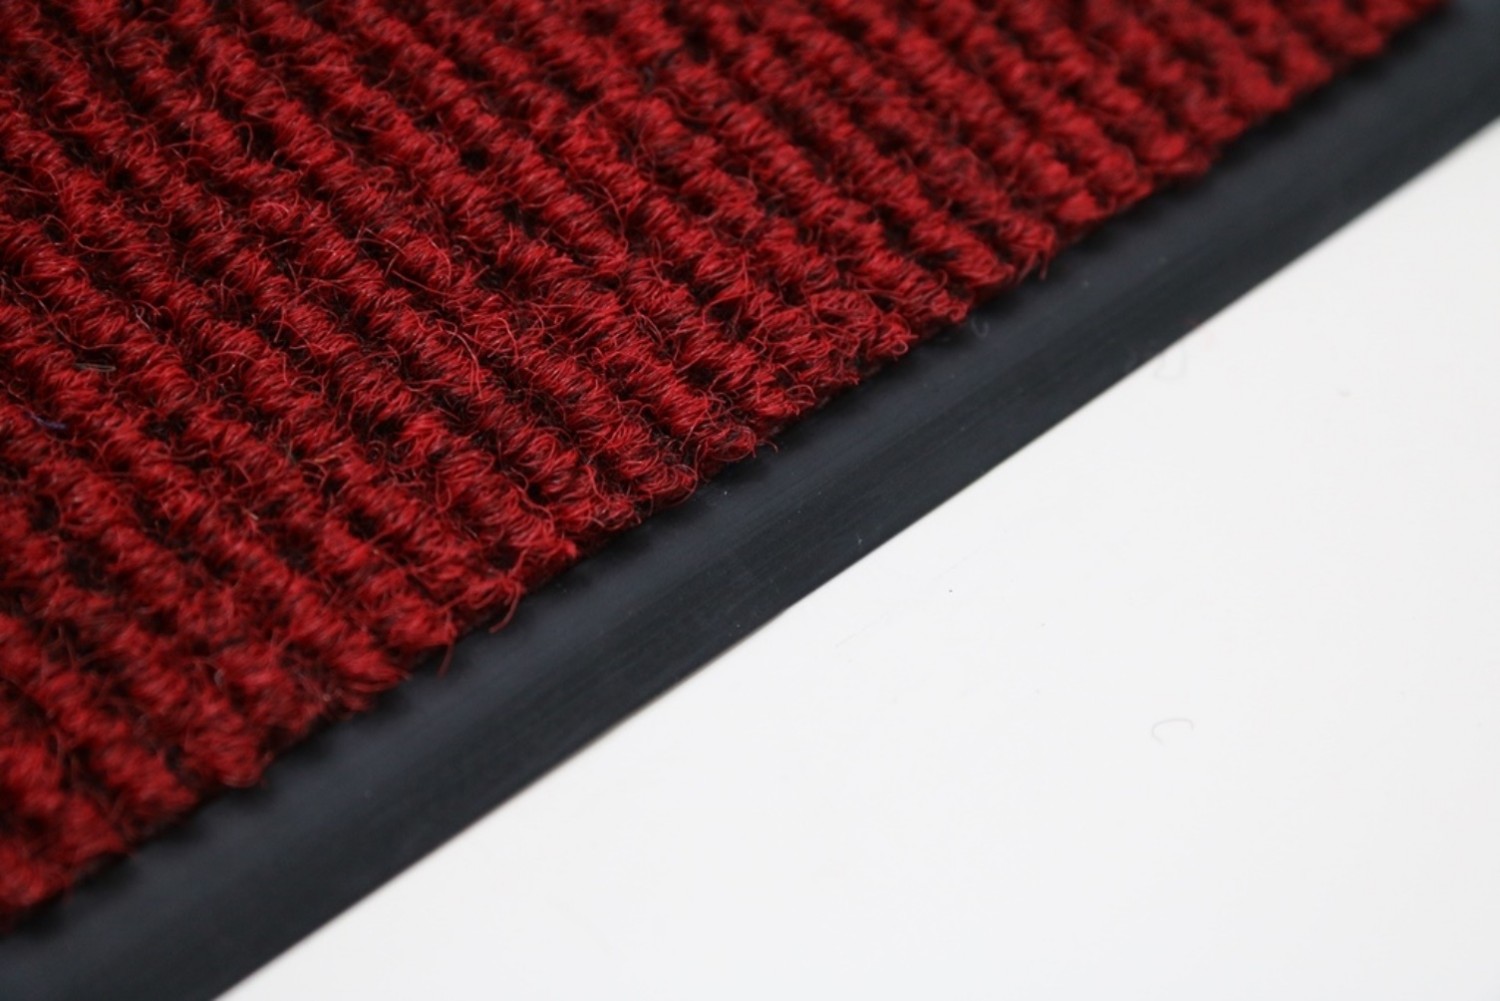 Brilliant Cord red mats